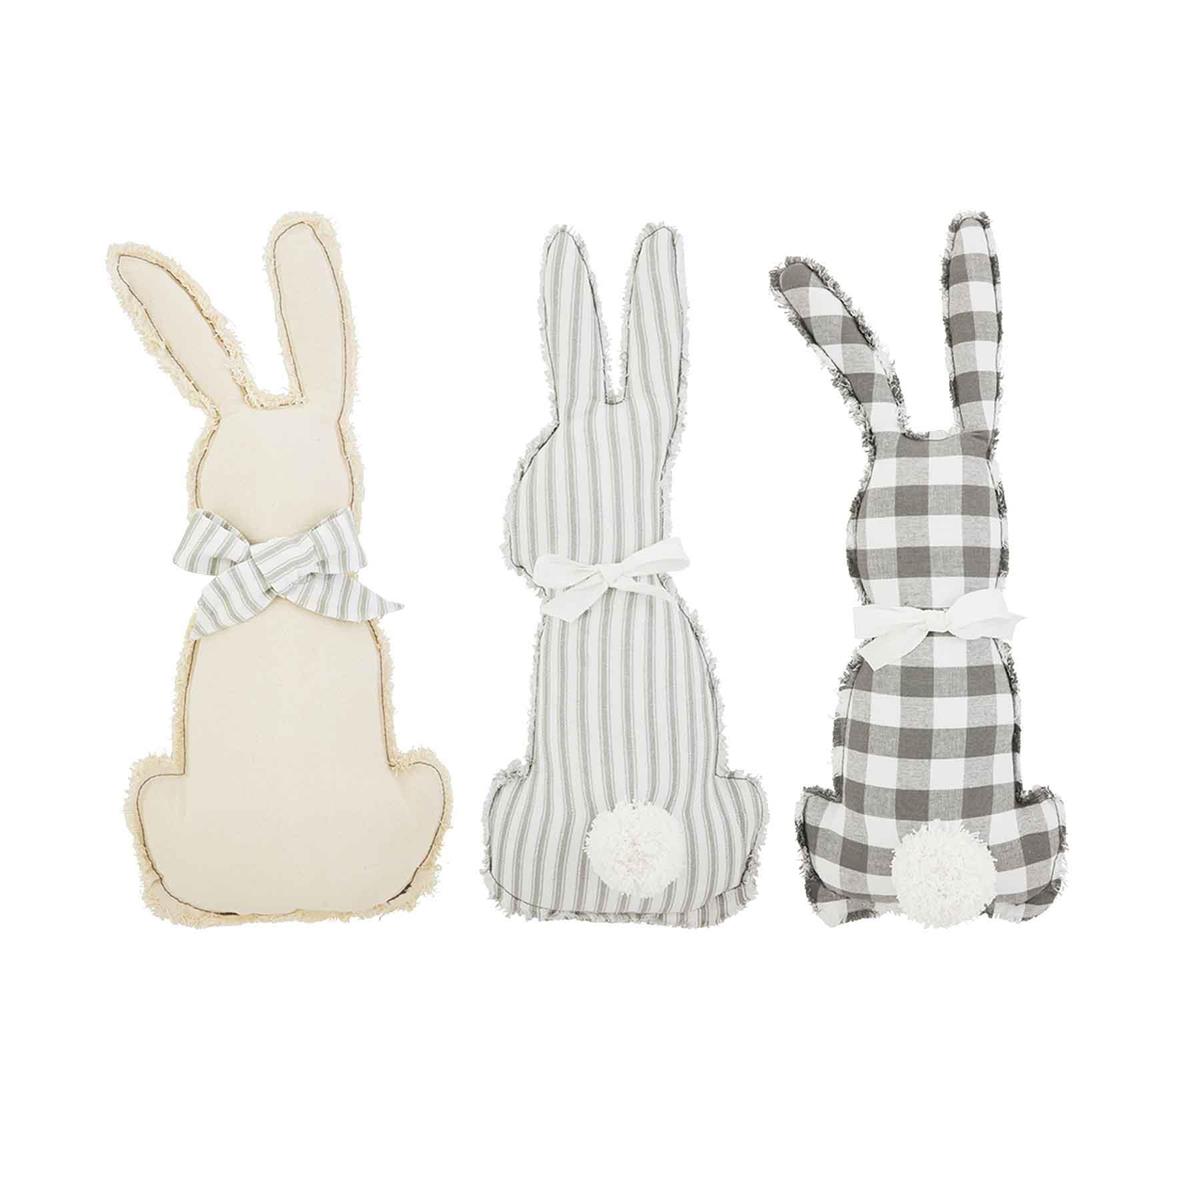 Bunny Shape Pillow (Various Styles)